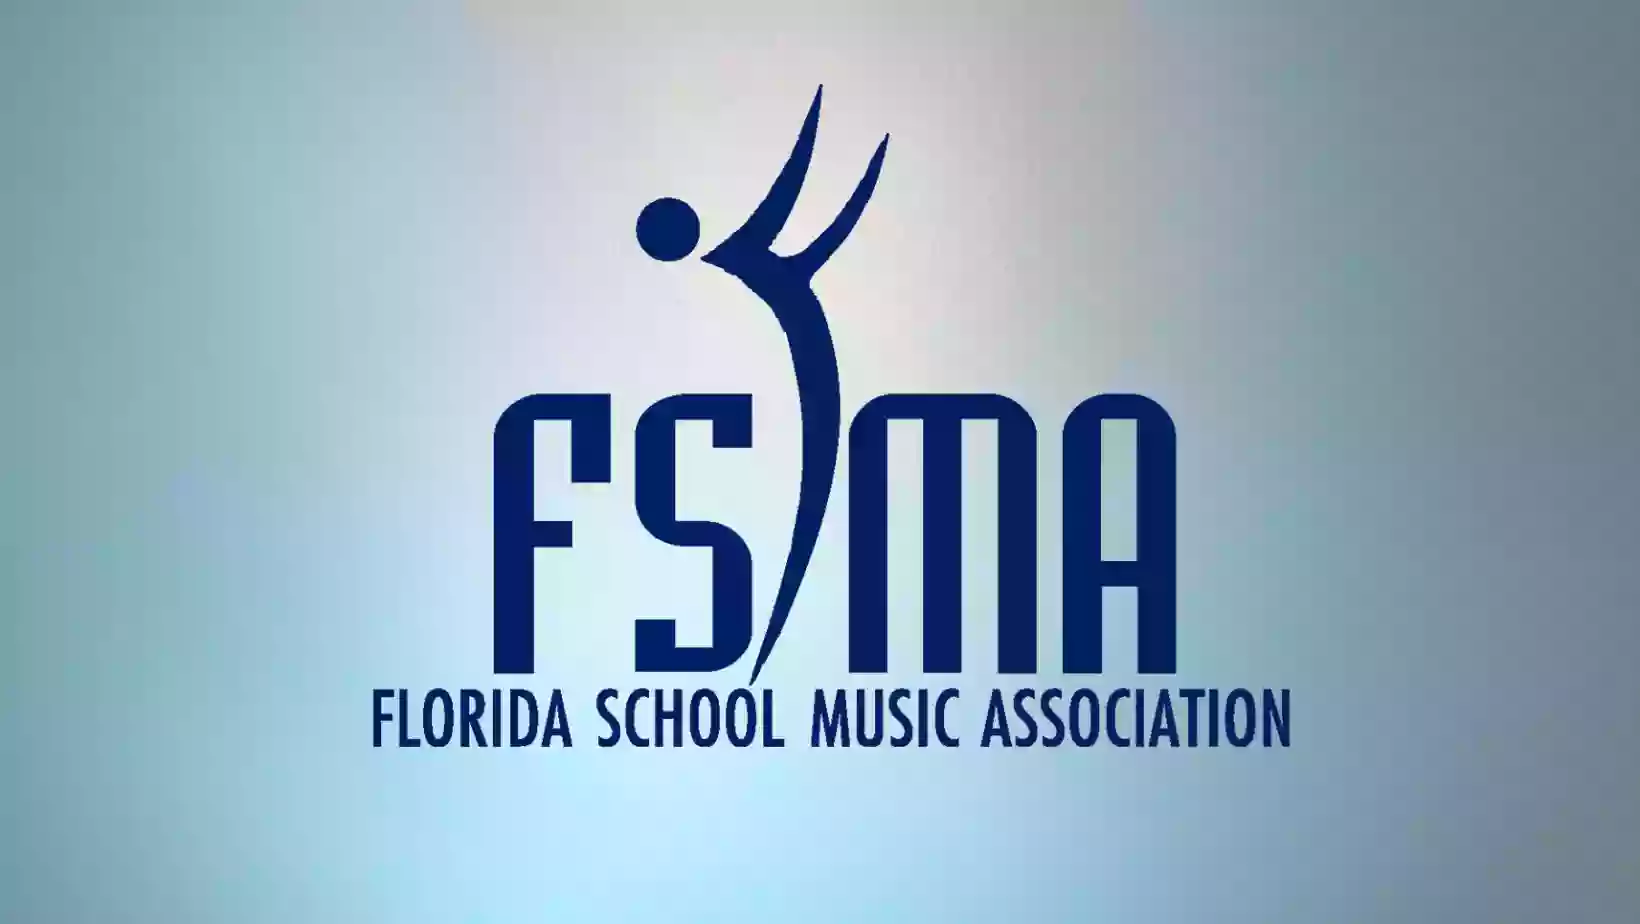 Florida School Music Association Inc